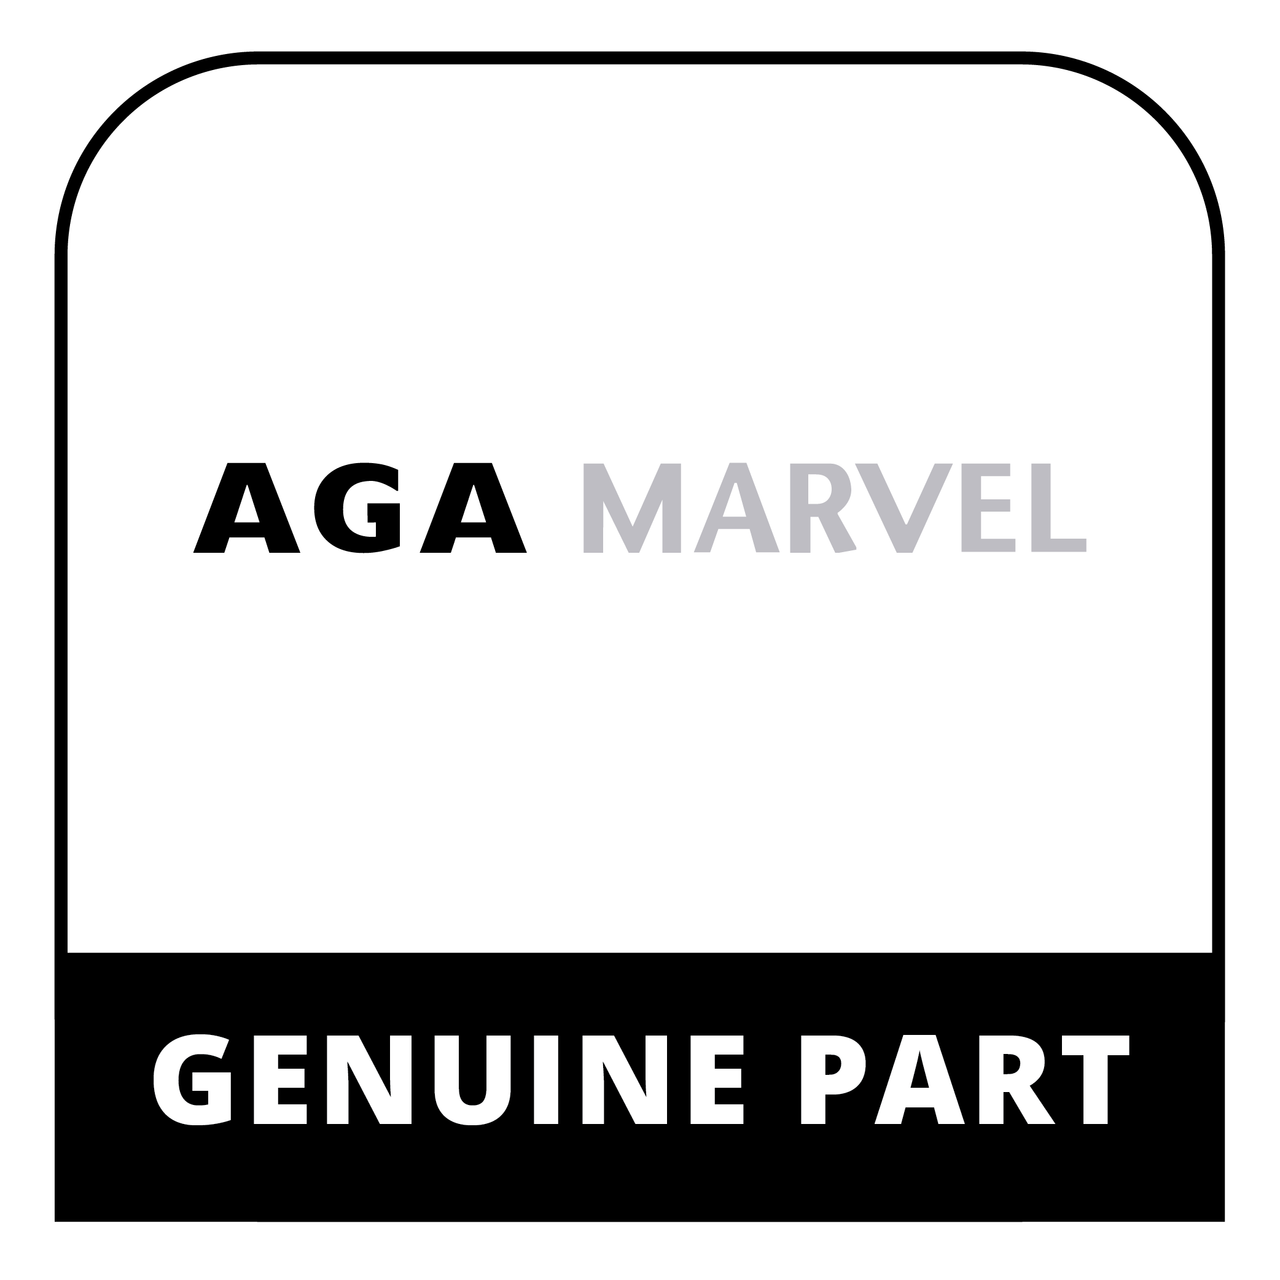 AGA Marvel R2706 - Hot Plate Baffle (Ro5M342461D) Rayburn - Genuine AGA Marvel Part